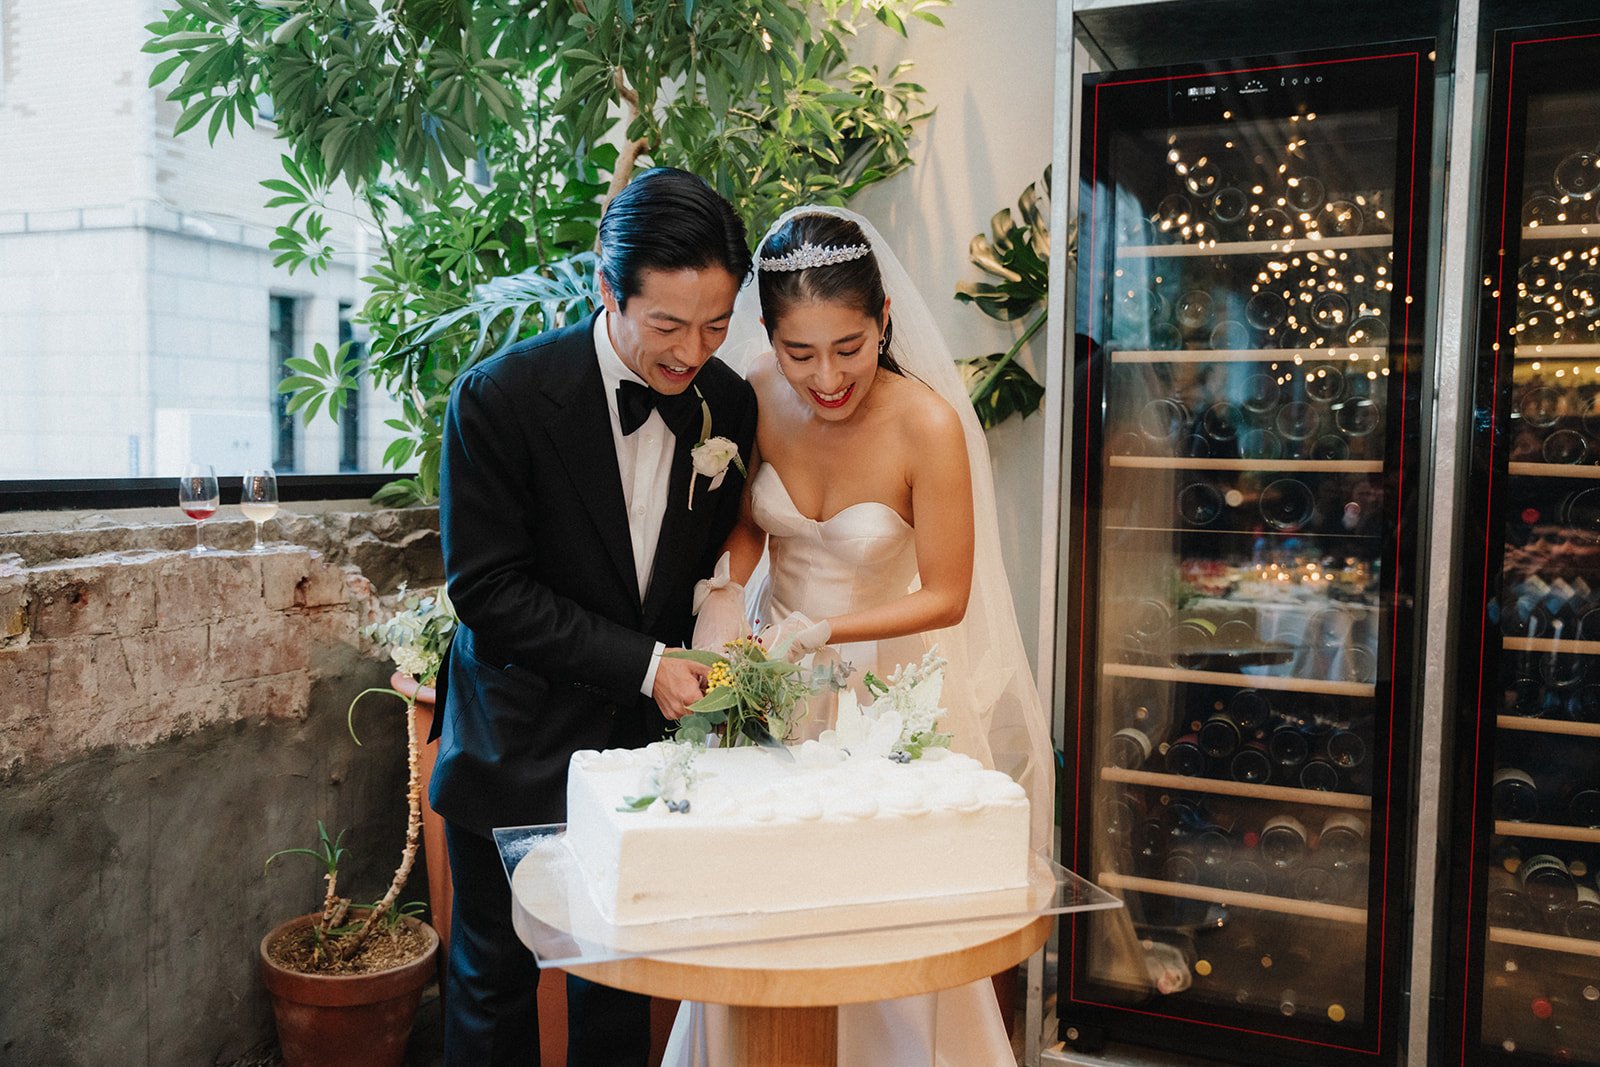  Bride and groom cut wedding cake for their trendy Tokyo wedding.  